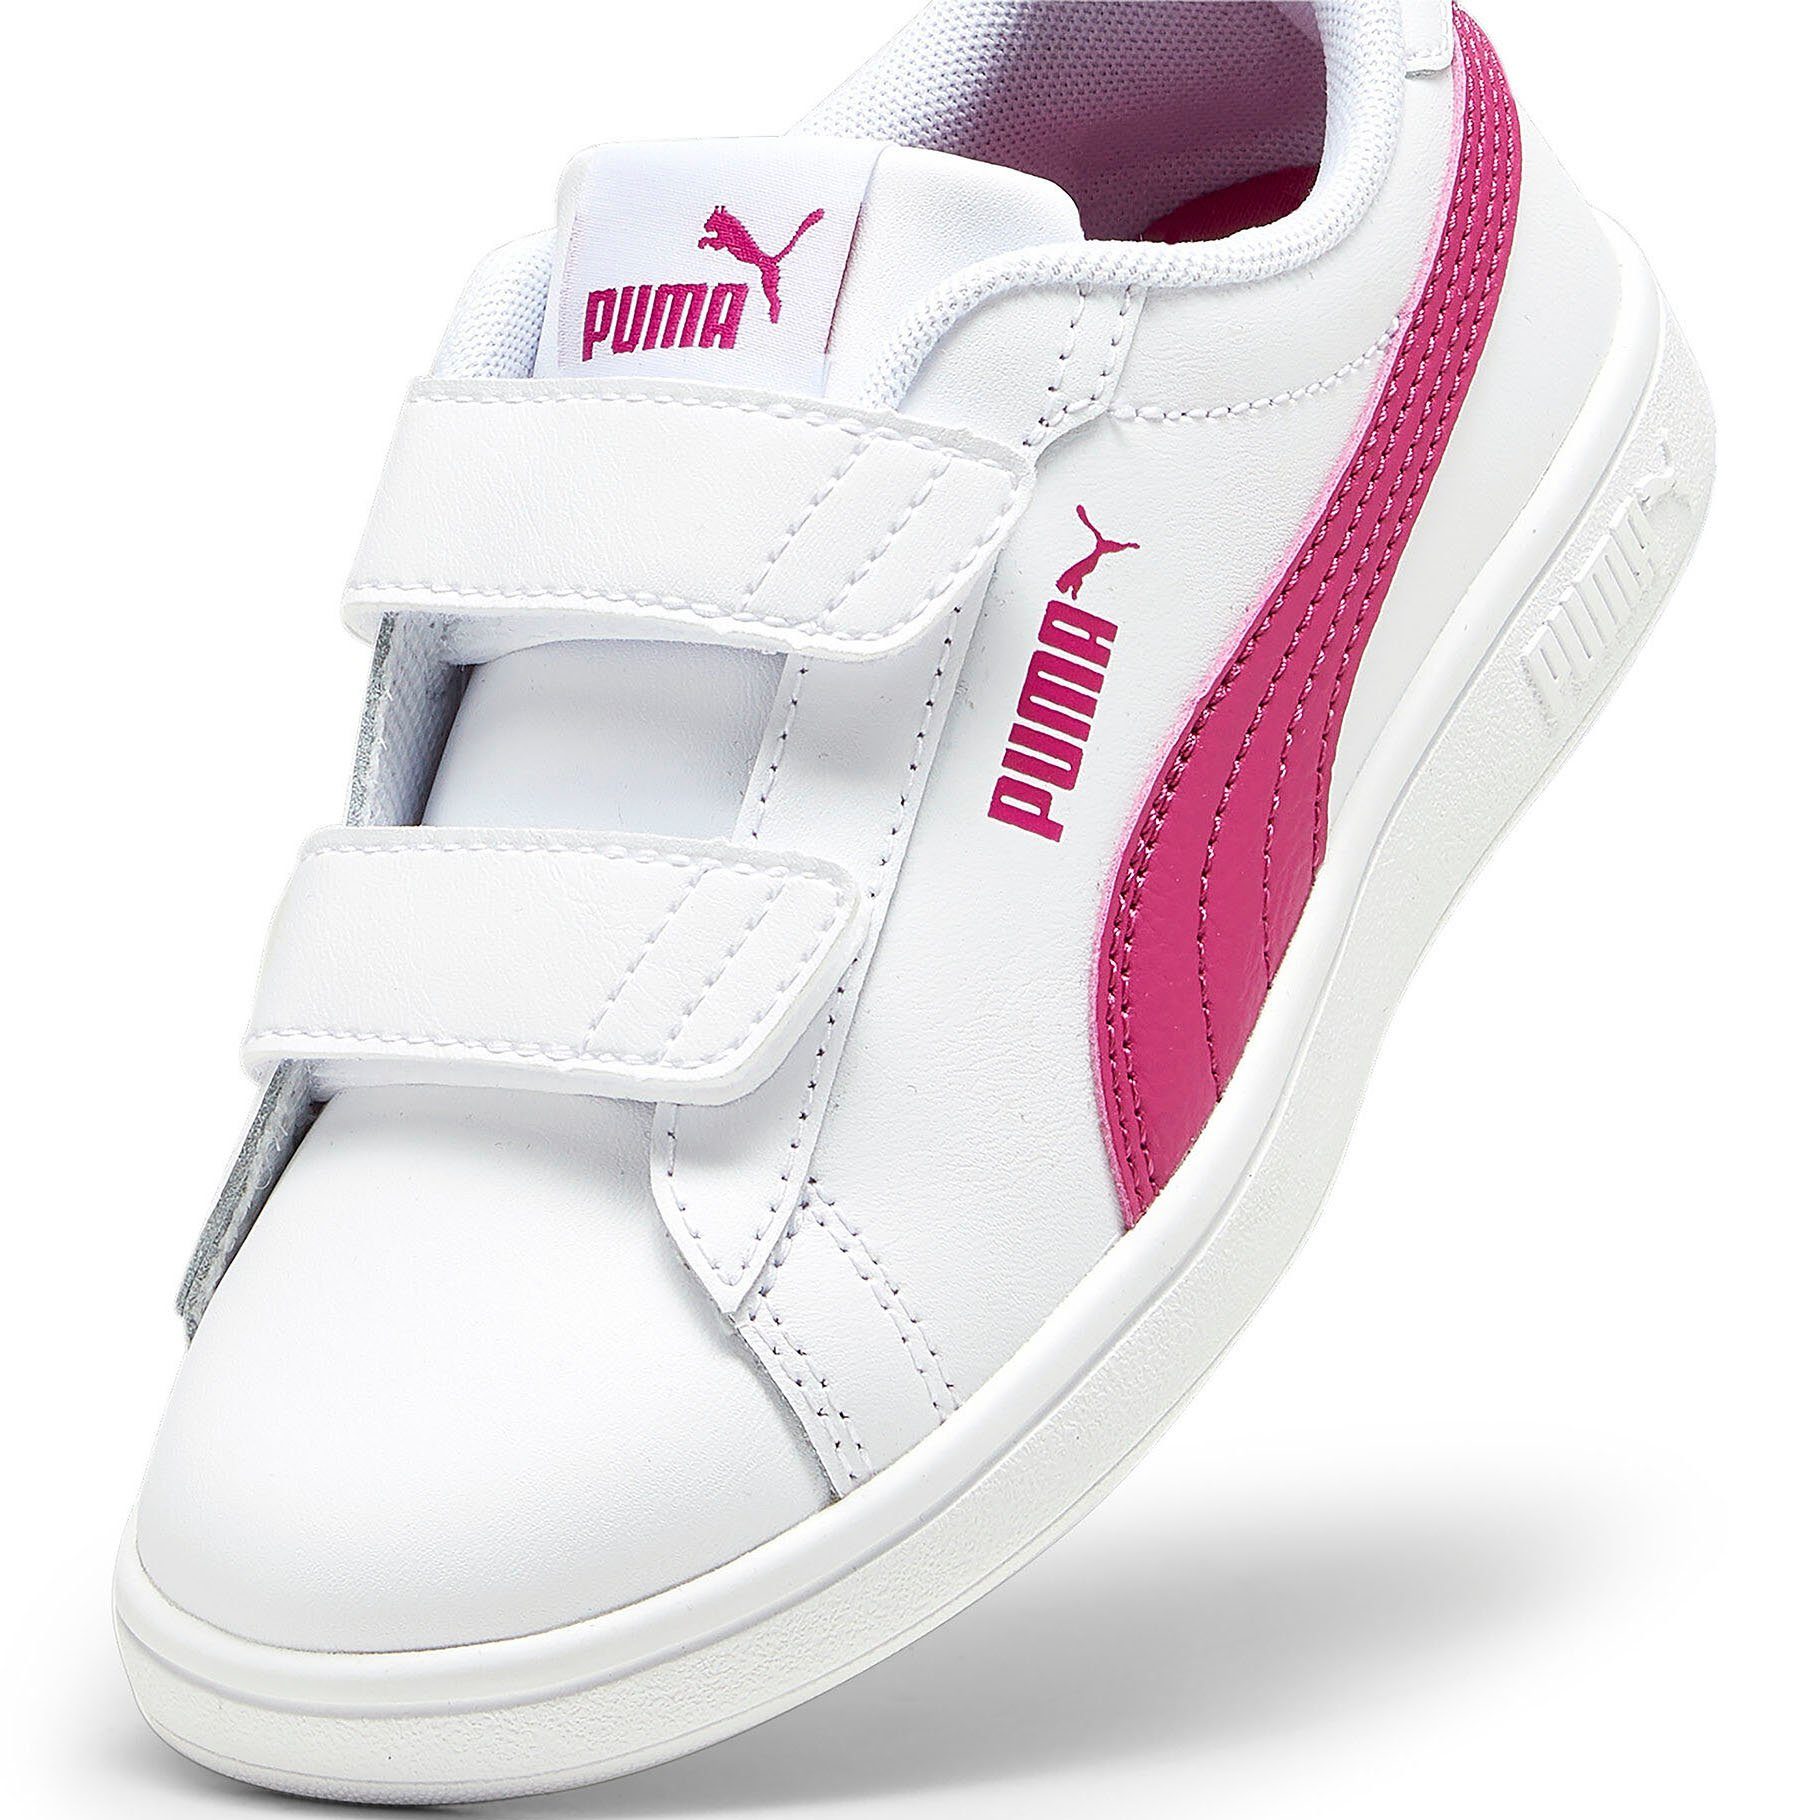 PUMA SMASH 3.0 L V White-Pinktastic mit PUMA Klettverschluss PS Sneaker